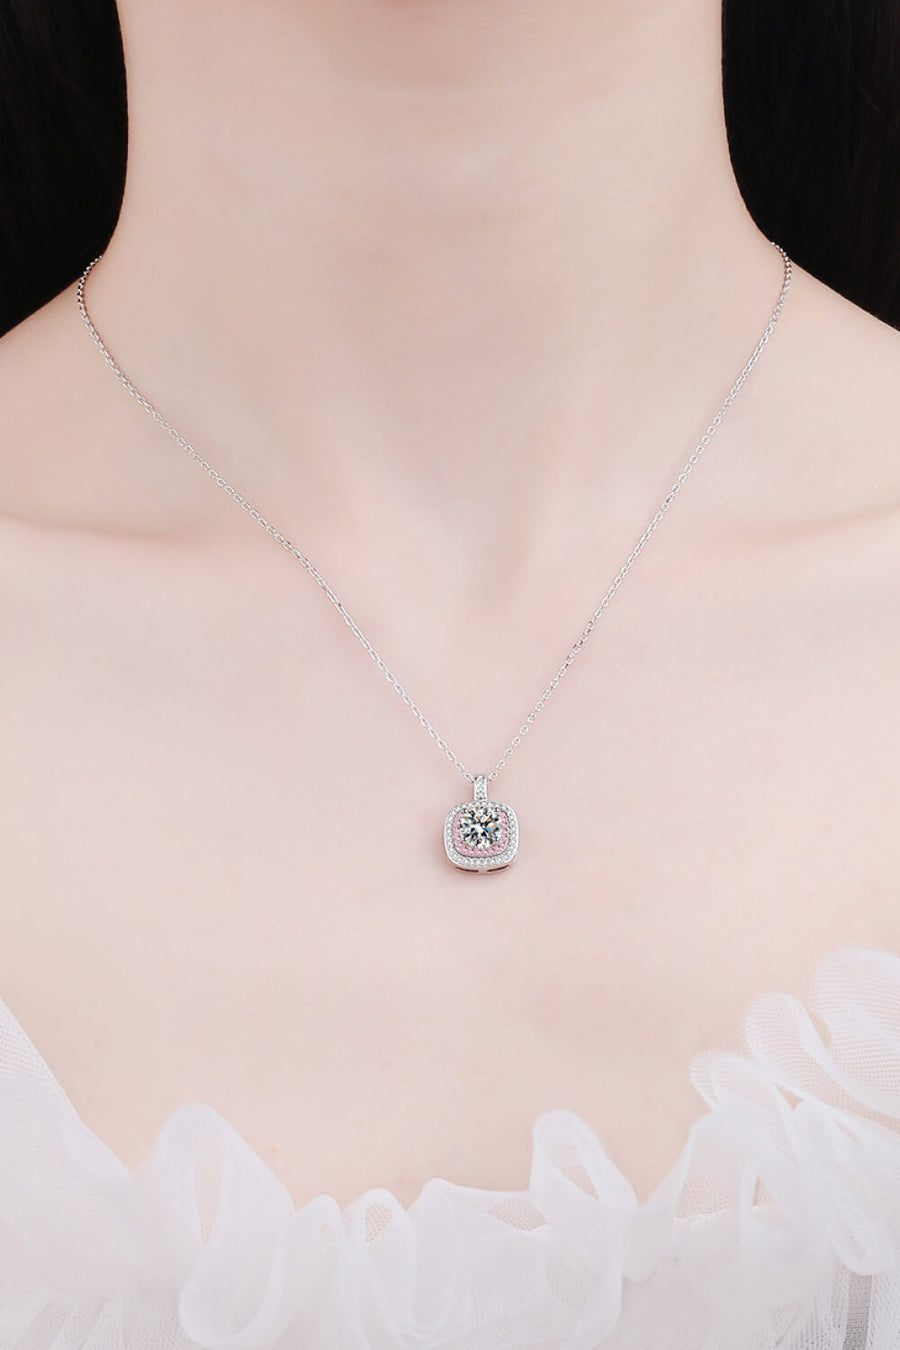 Best Diamond Necklace Jewelry Gifts for Women | 1 Carat Diamond Geometric Pendant Necklace | MASON New York